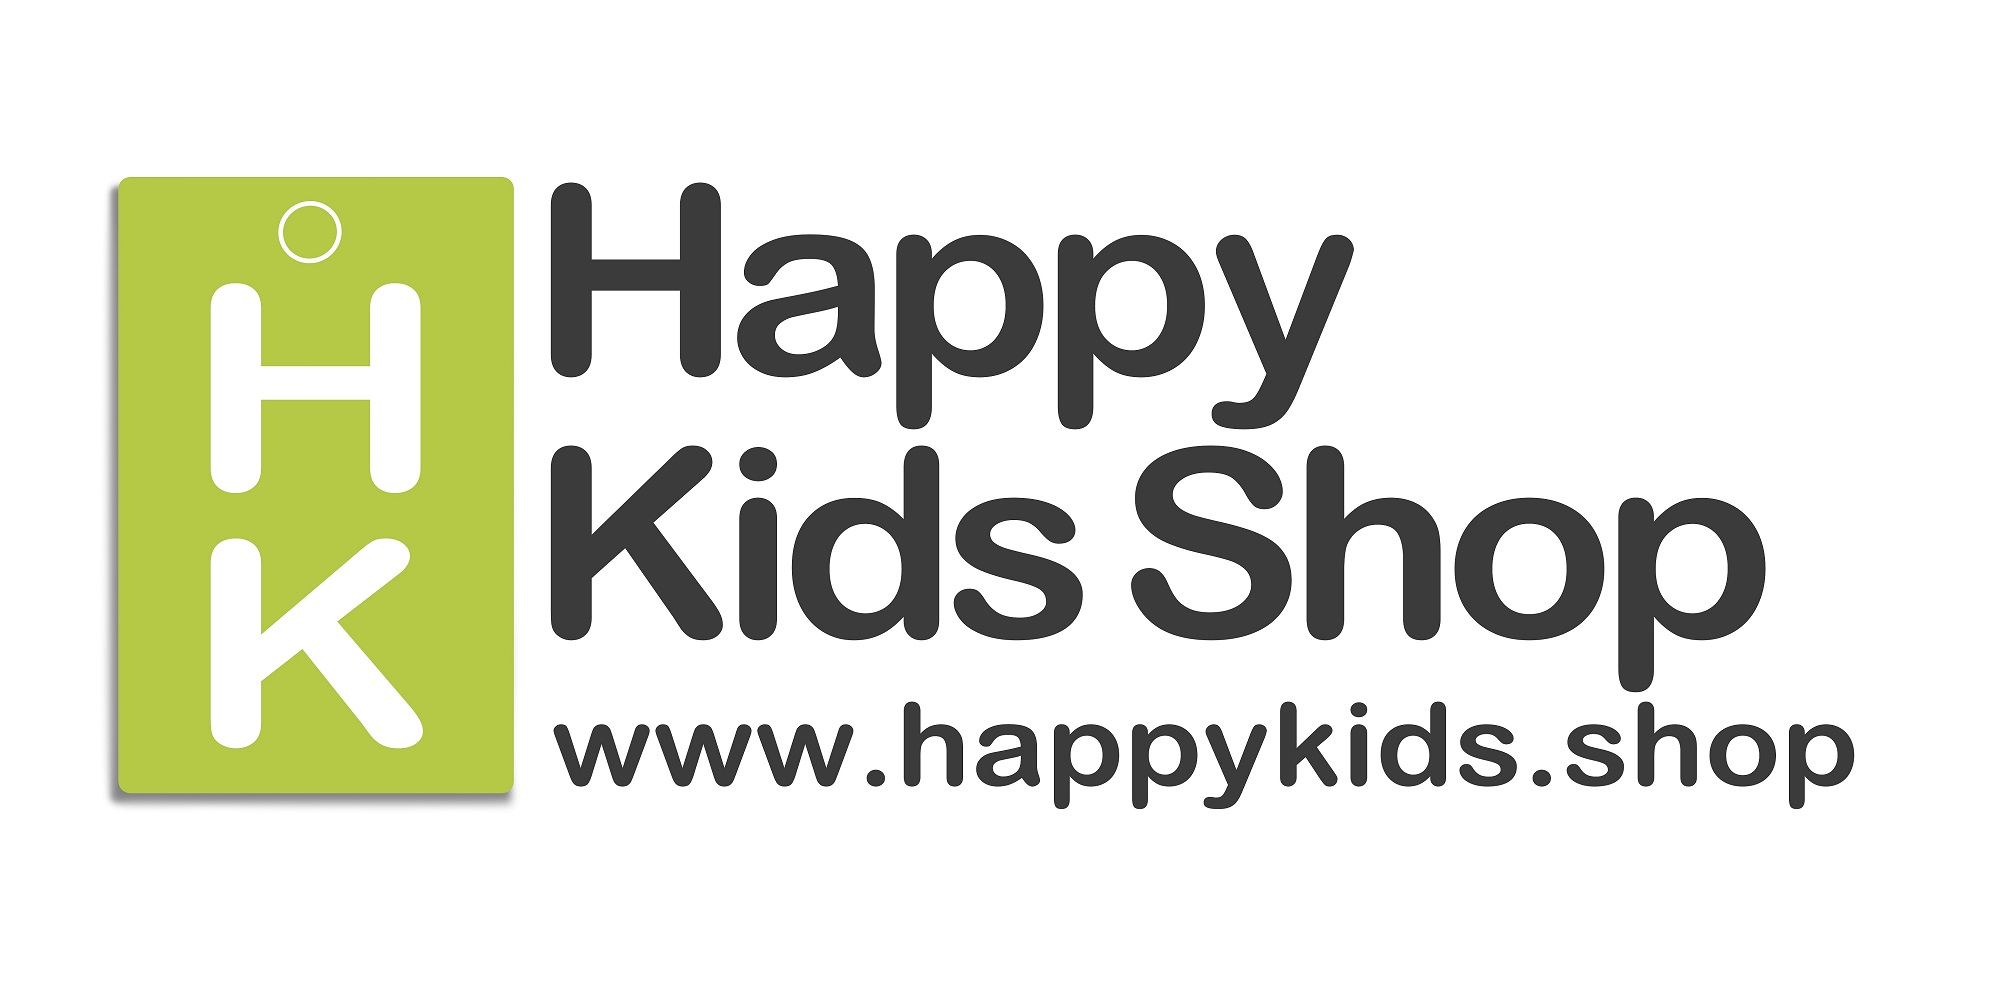 (c) Happykids.shop